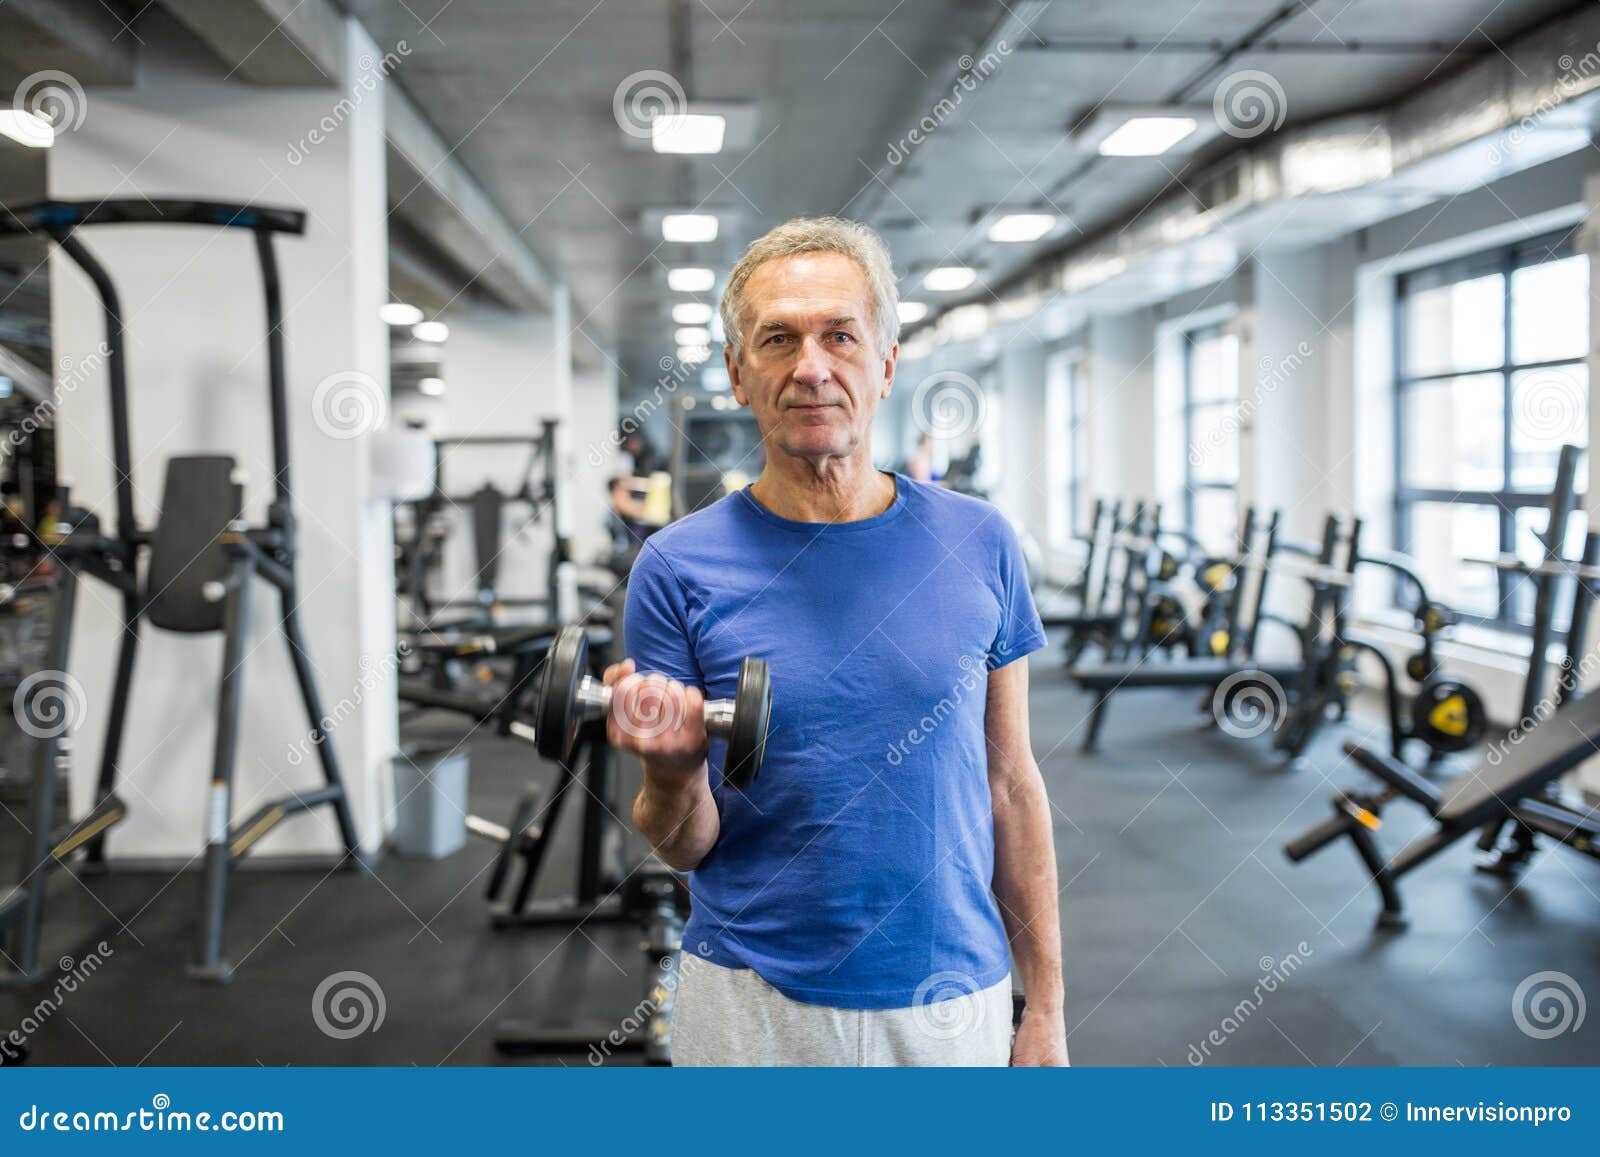 Confident Senior Man Holding Dumbbell in Gym Stock Photo - Image of ...